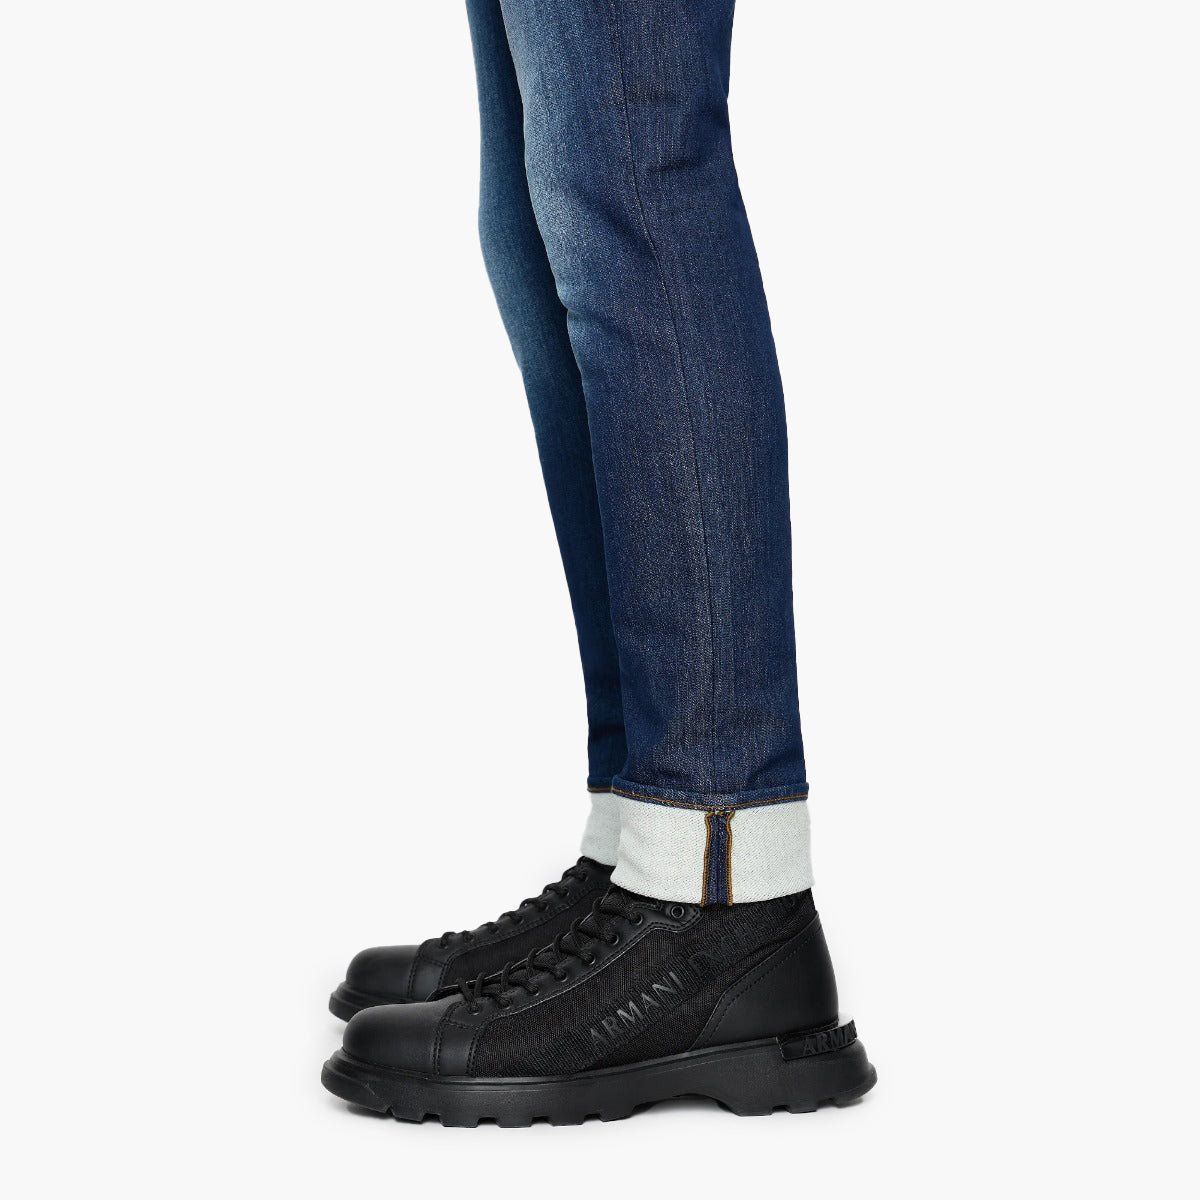 Armani Exchange J33 Super Skinny Comfort Fleece Denim Jeans | LEVISONS